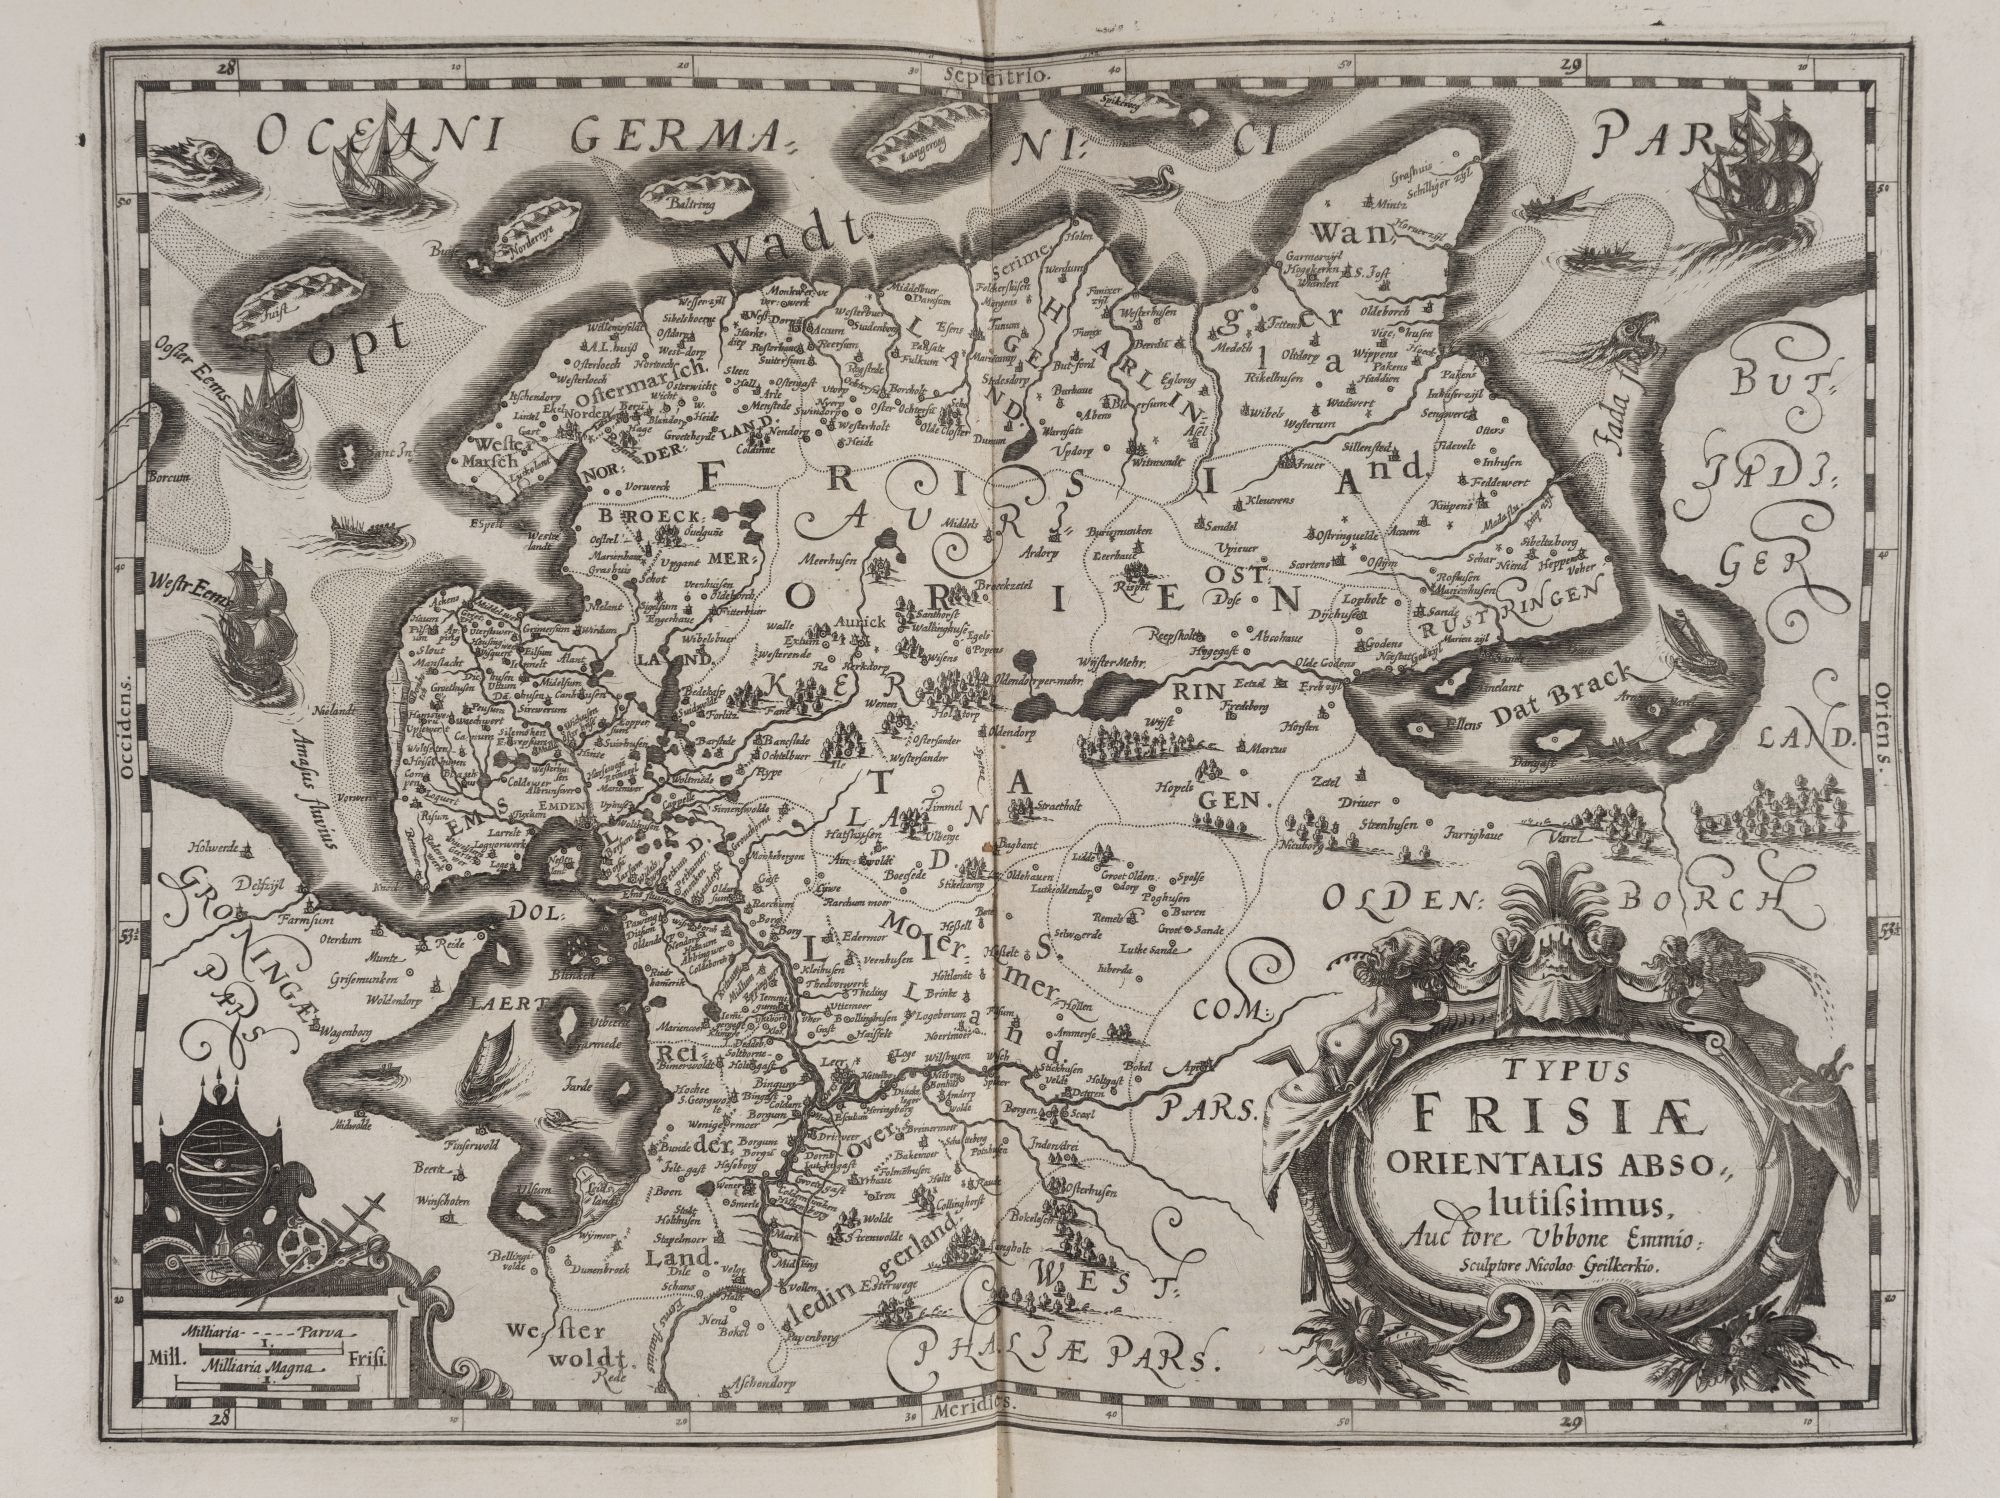 K01. Kaart van Oost-Friesland uit: Emmius, Rerum Frisicarum historia (Leiden 1616)K01. Map of East-Frisia from: Emmius, Rerum Frisicarum historia (Leiden 1616)K01. Karte von Ostfriesland in: Emmius, Rerum Frisicarum historia (Leiden 1616)